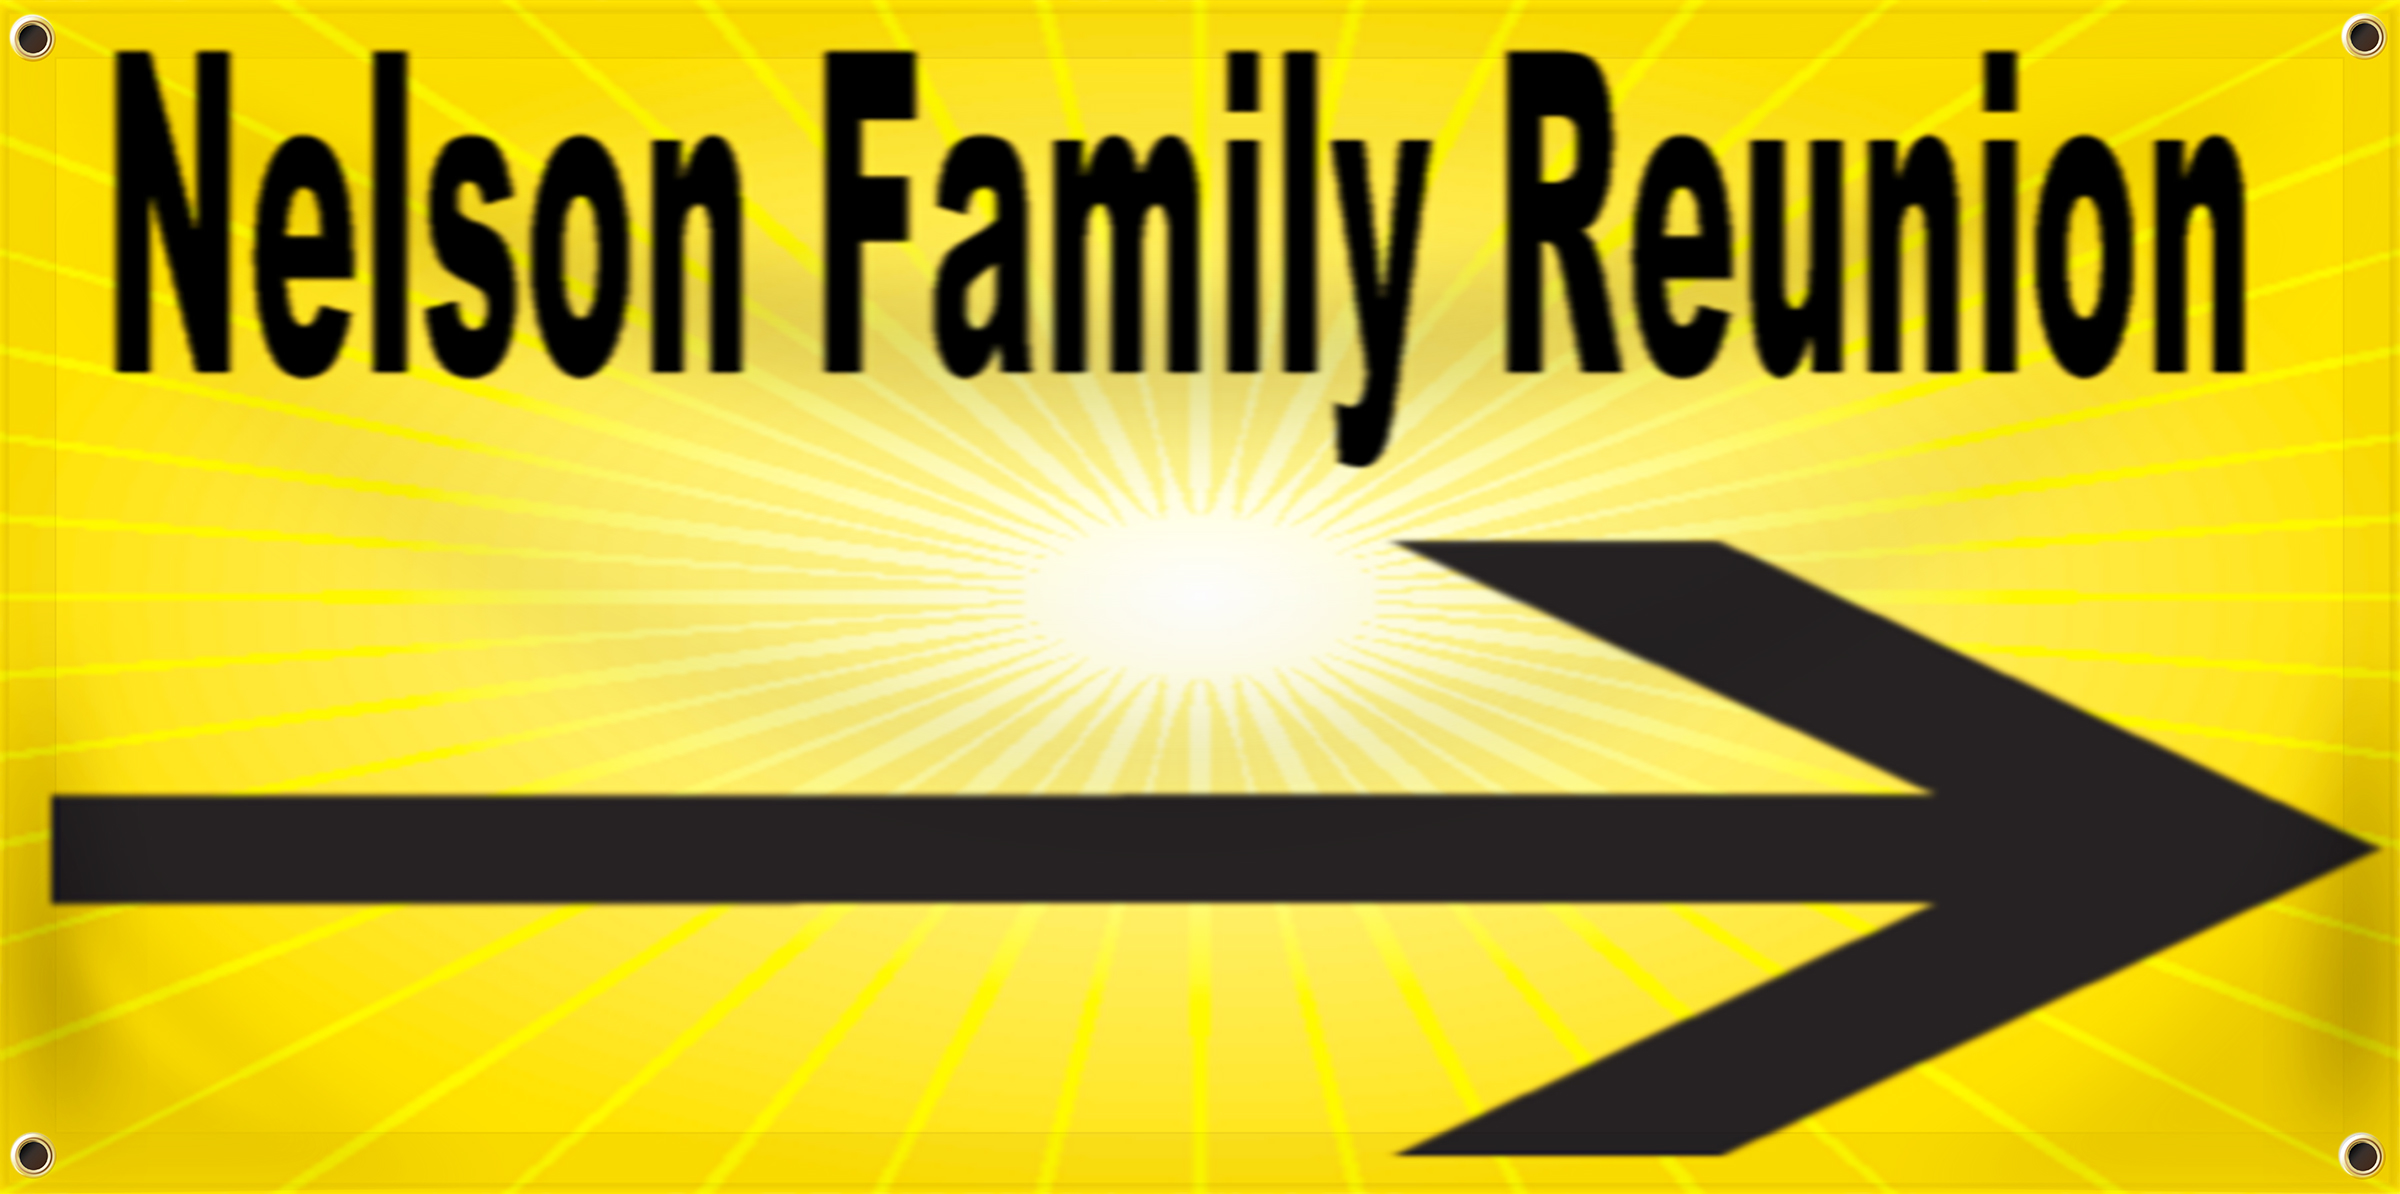 Family Reunion Banner Idea | LawnSigns.com